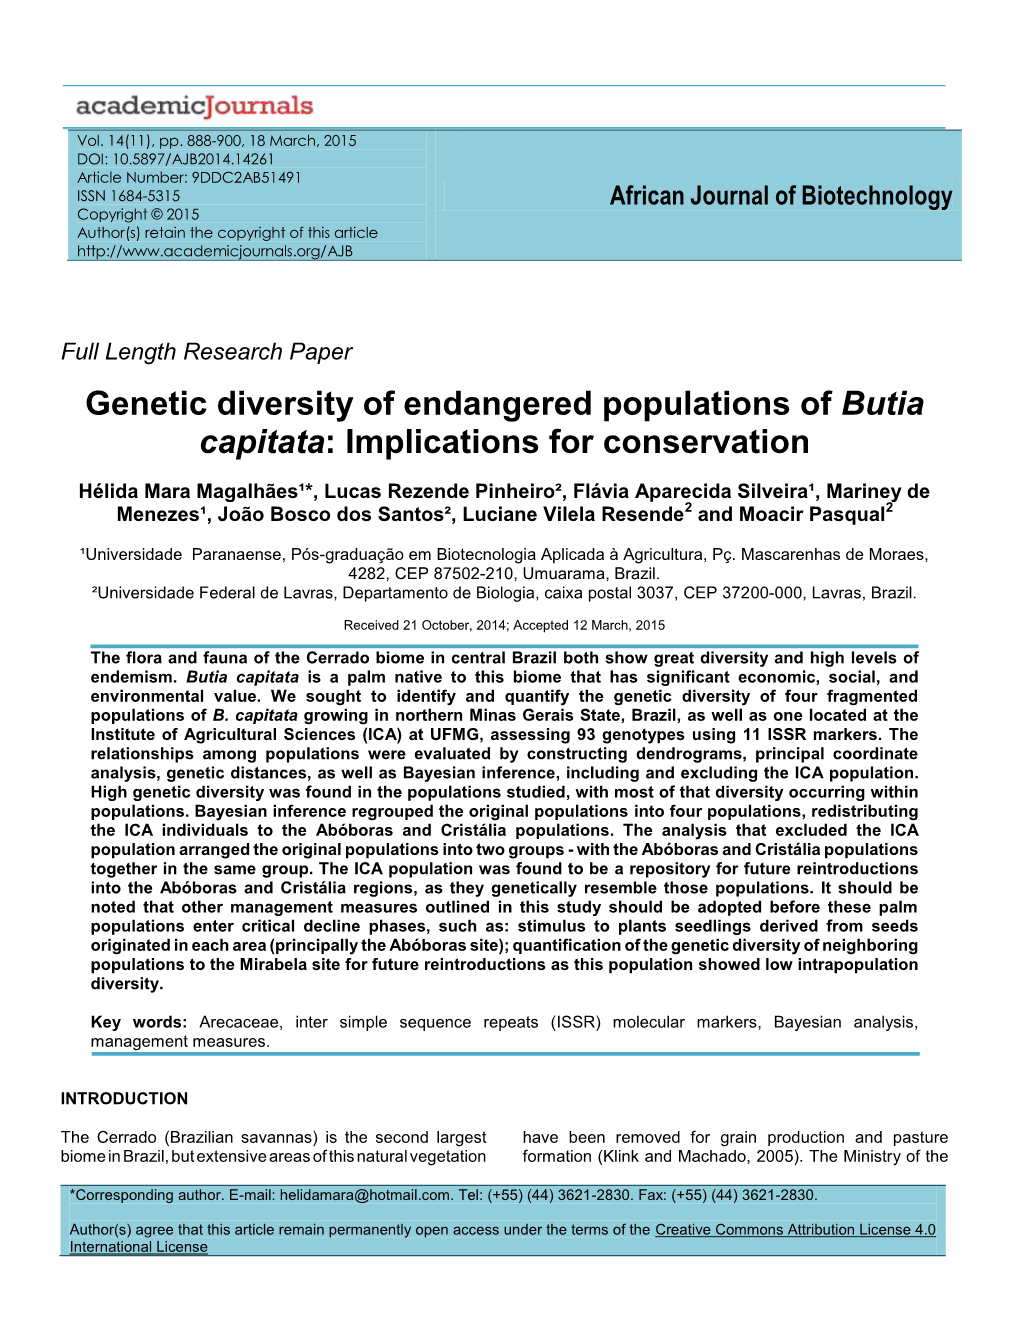 Genetic Diversity of Populations of Butia Capitata Endangered